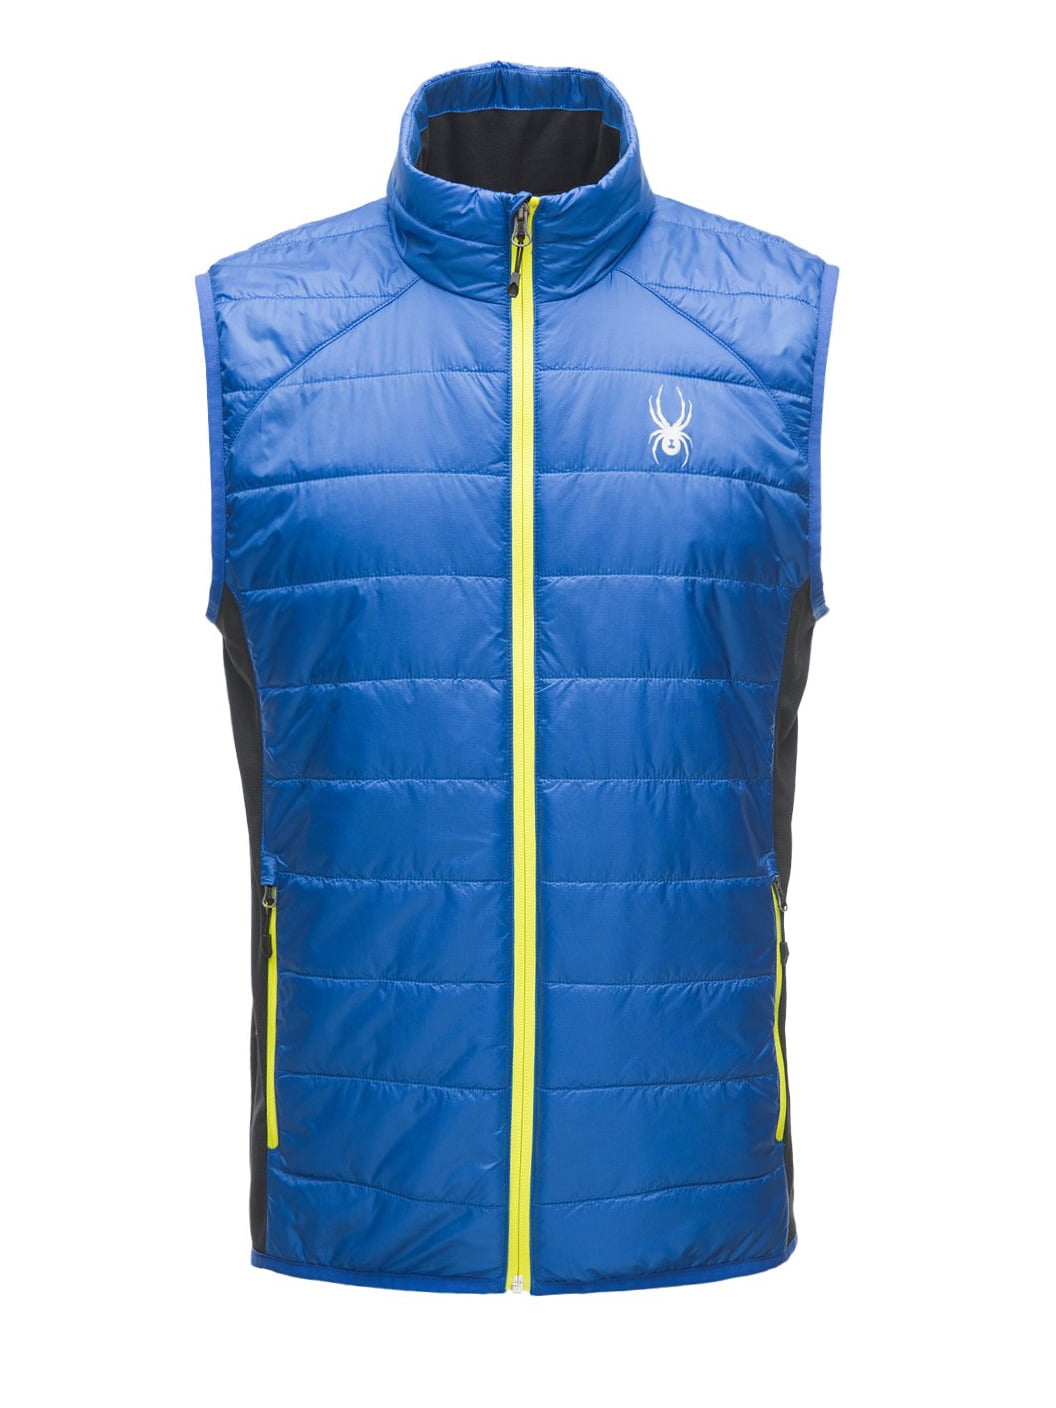 SPYDER Mens Glissade Waterproof Insulated Vest for Winter Sport